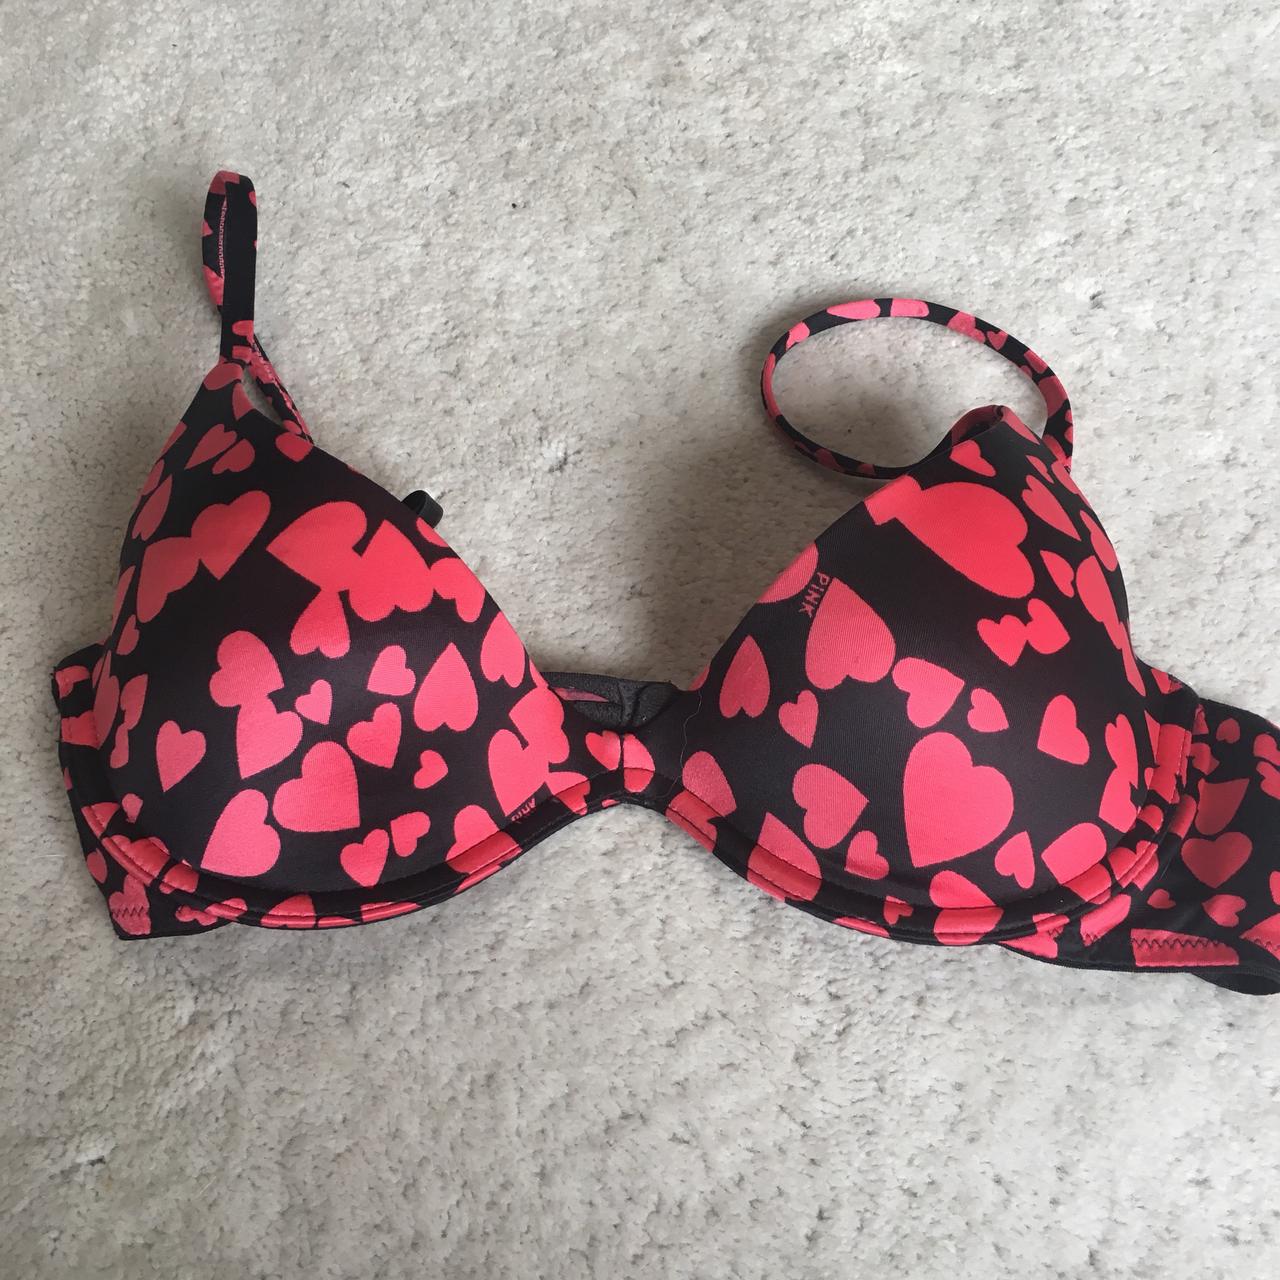 Victoria's Secret leopard print bra size 34B